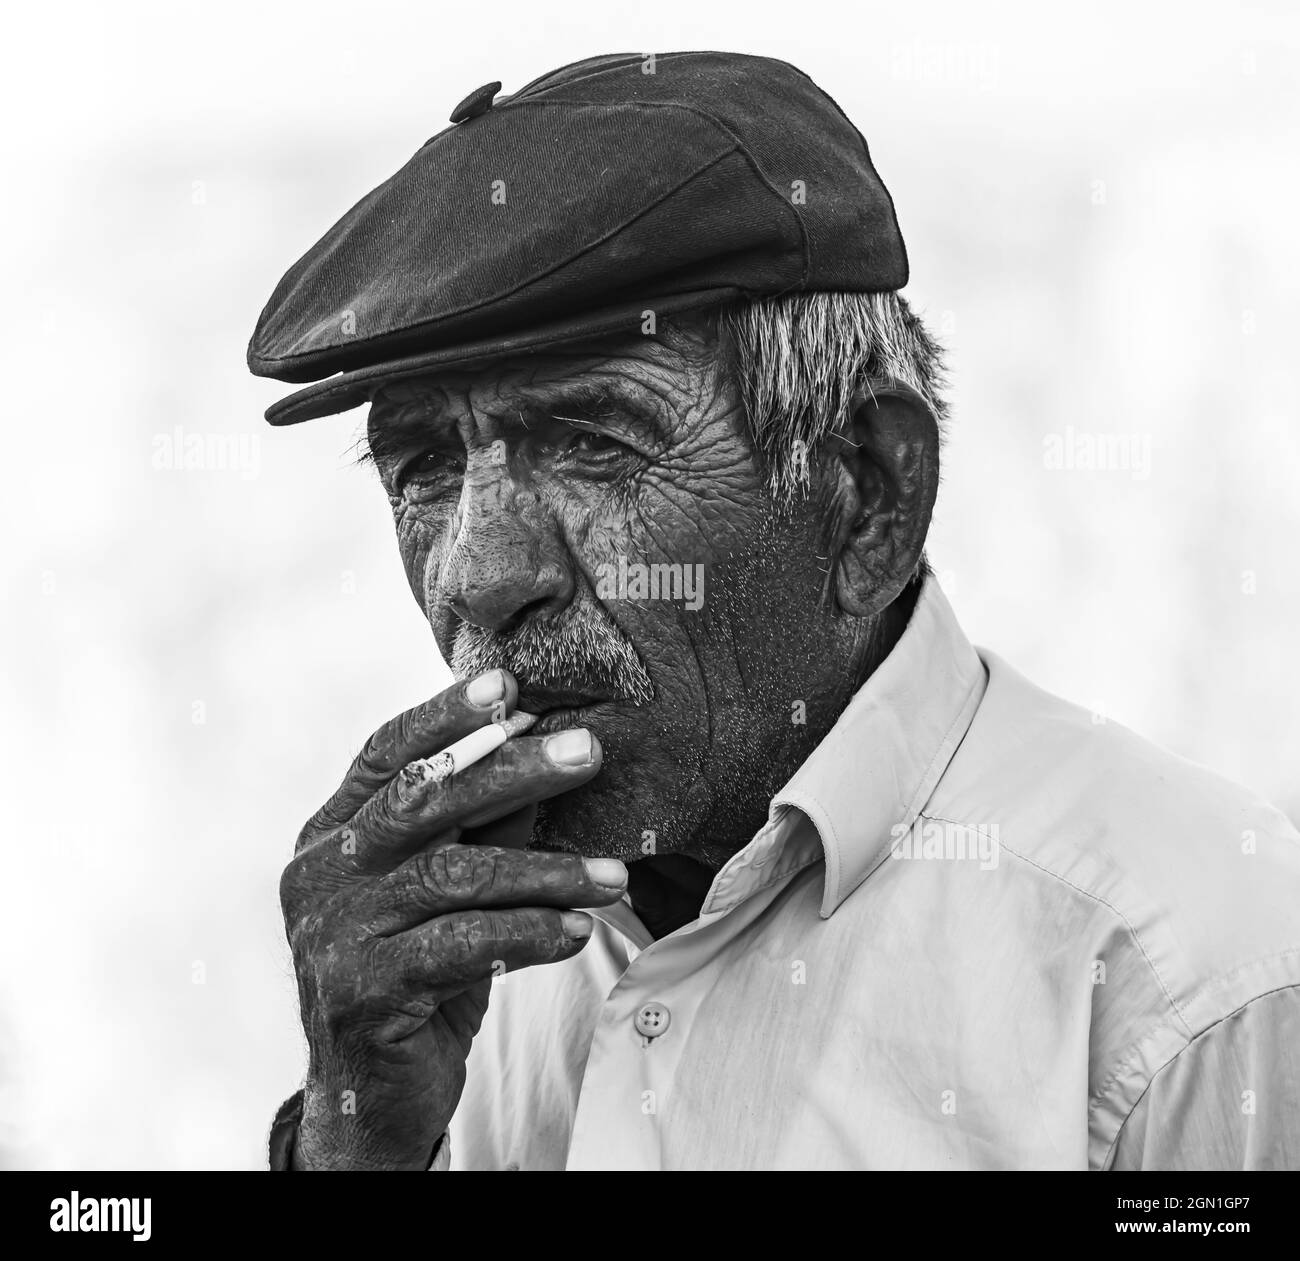 KAYSERI, TURKEY - Jul 15, 2021: A greyscale shot of middle-aged man smoking outside in Kayseri, Turkey Stock Photo